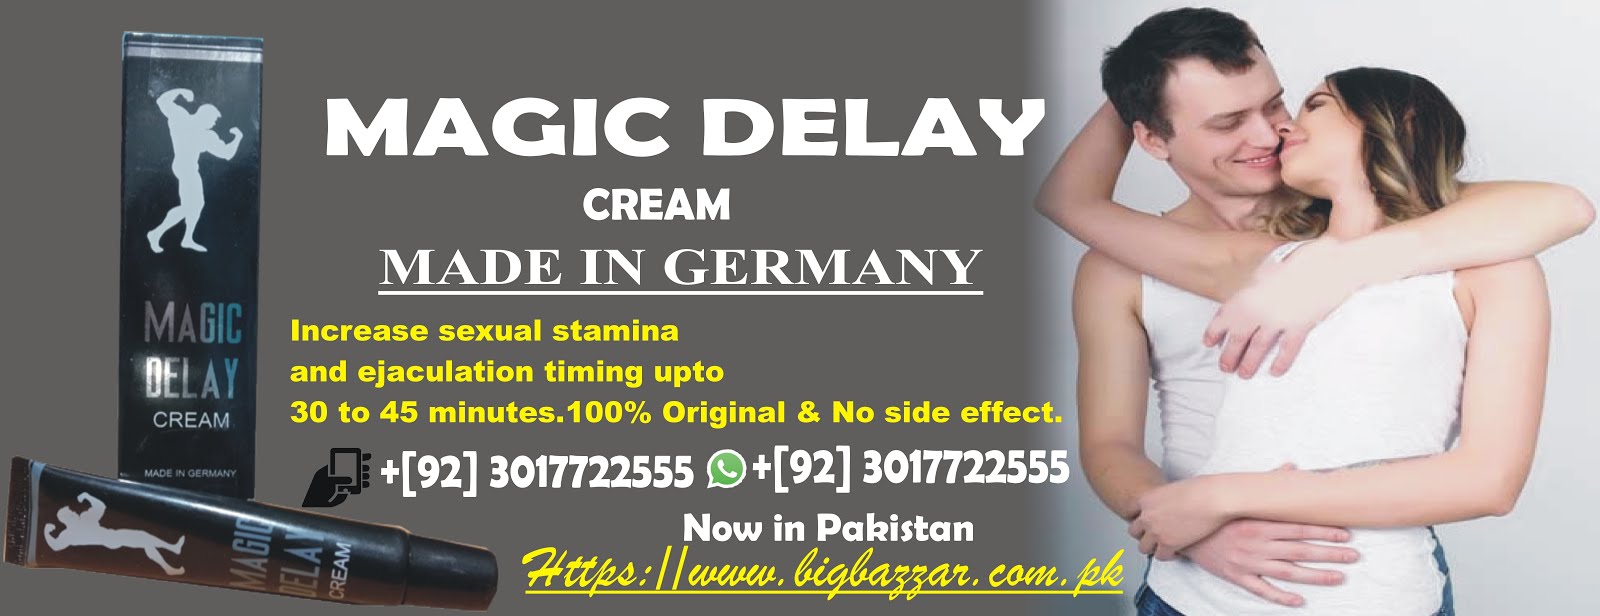 Magic Delay Cream Price In Pakistan | Bigbazzar Pakistan @ 03017722555